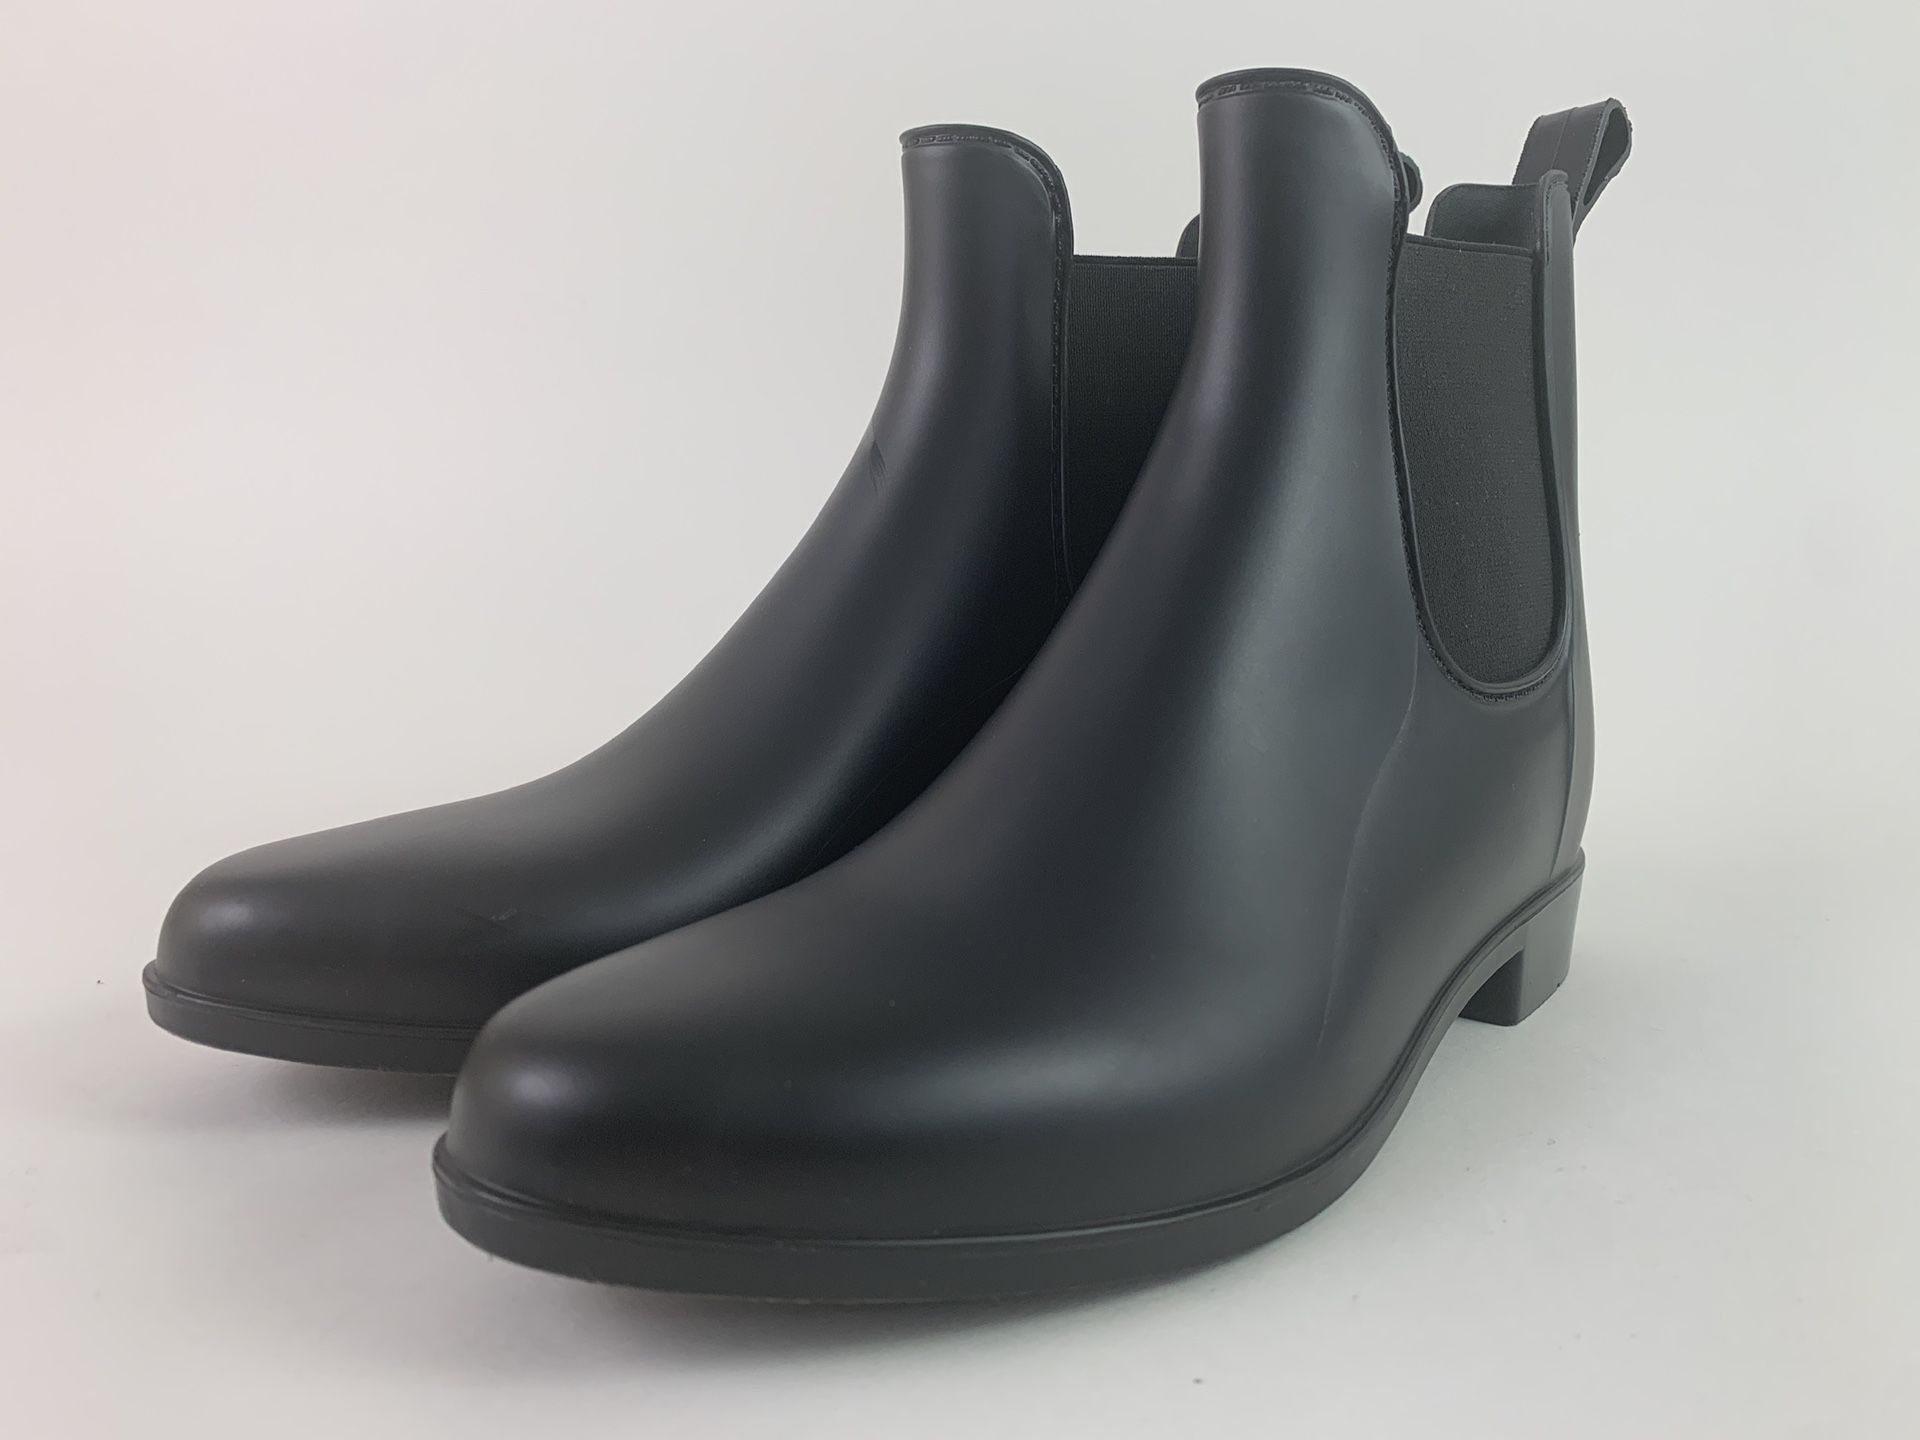 J. Crew Mercantile Chelsea Black Matte Rain Boots Women's 8 Ankle Pull On Waterproof Boots